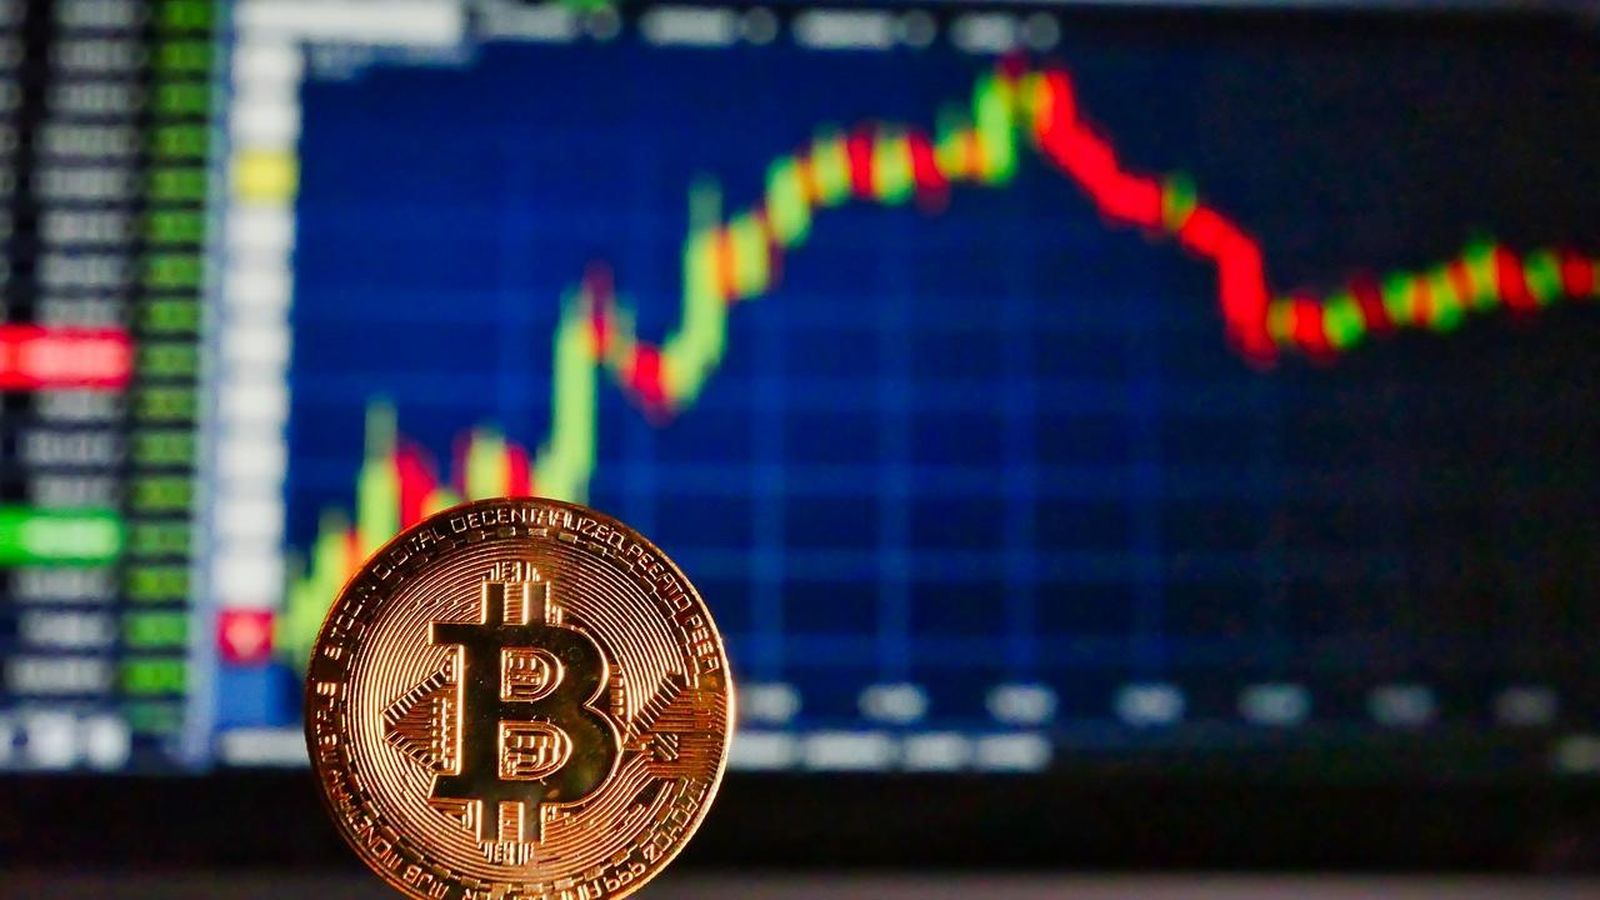 Cena kryptomeny bitcoin v sobotu prudko stúpla